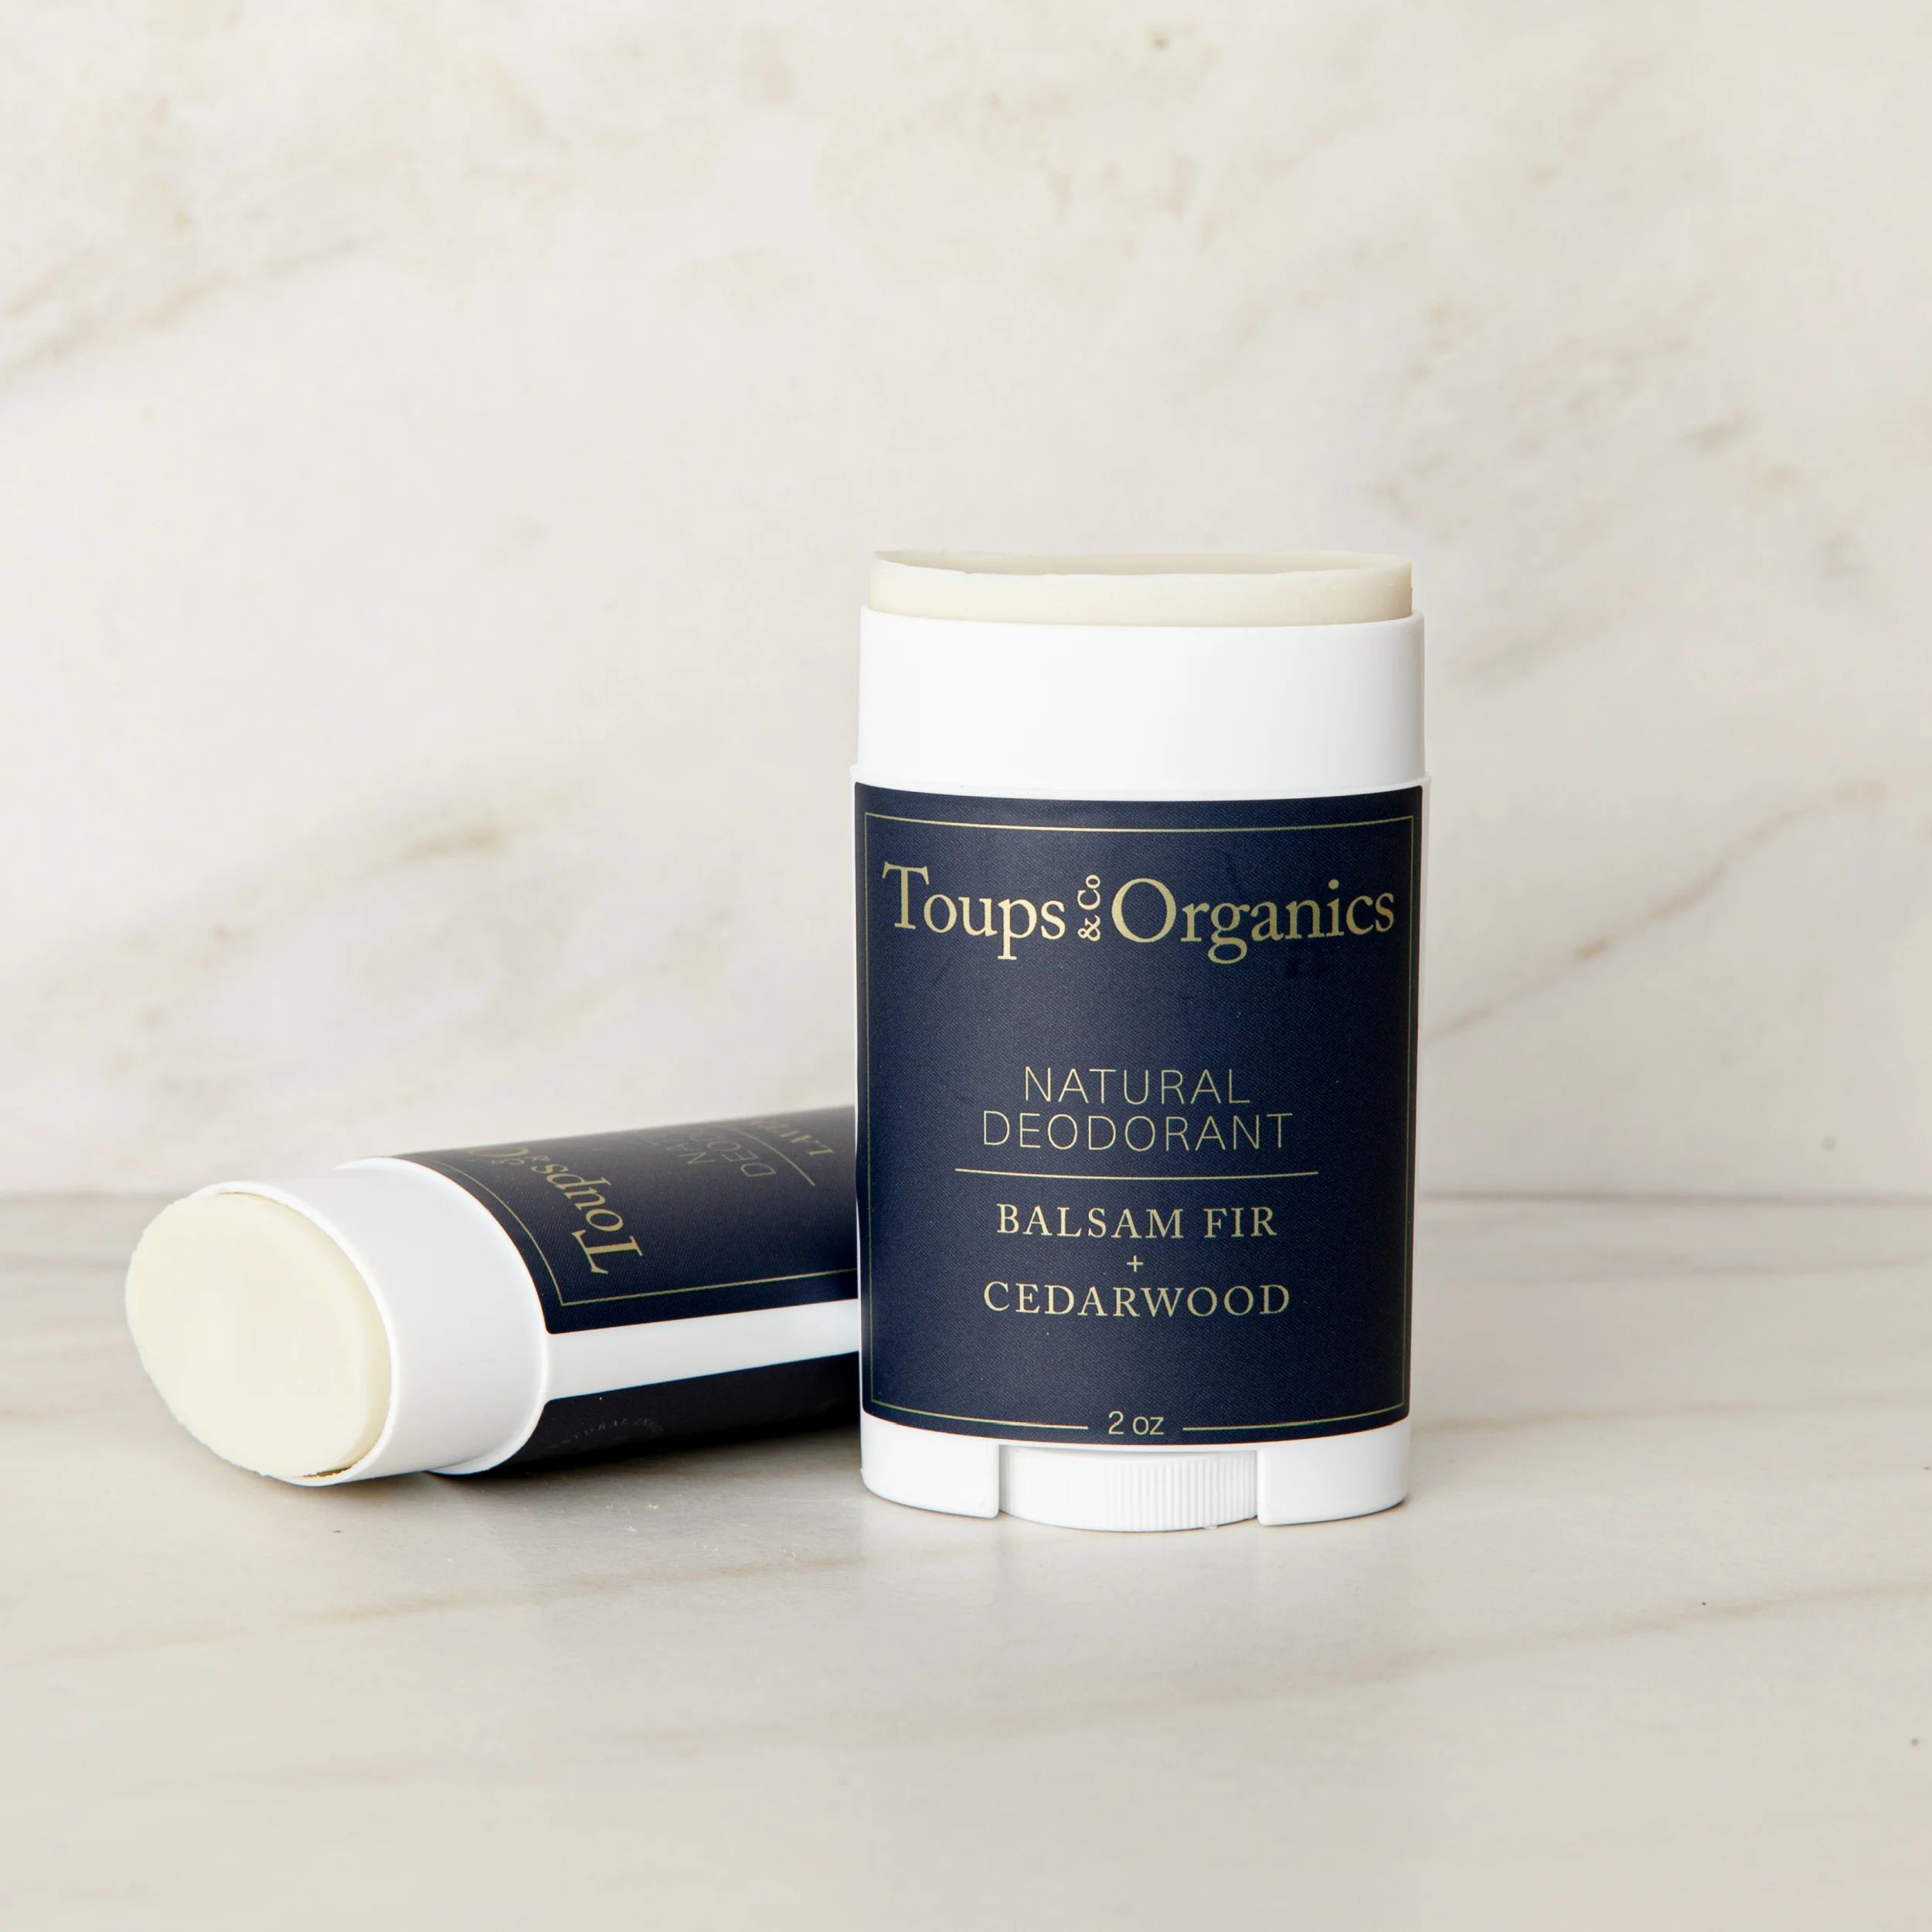 Natural Deodorant | Toups and Co Organics